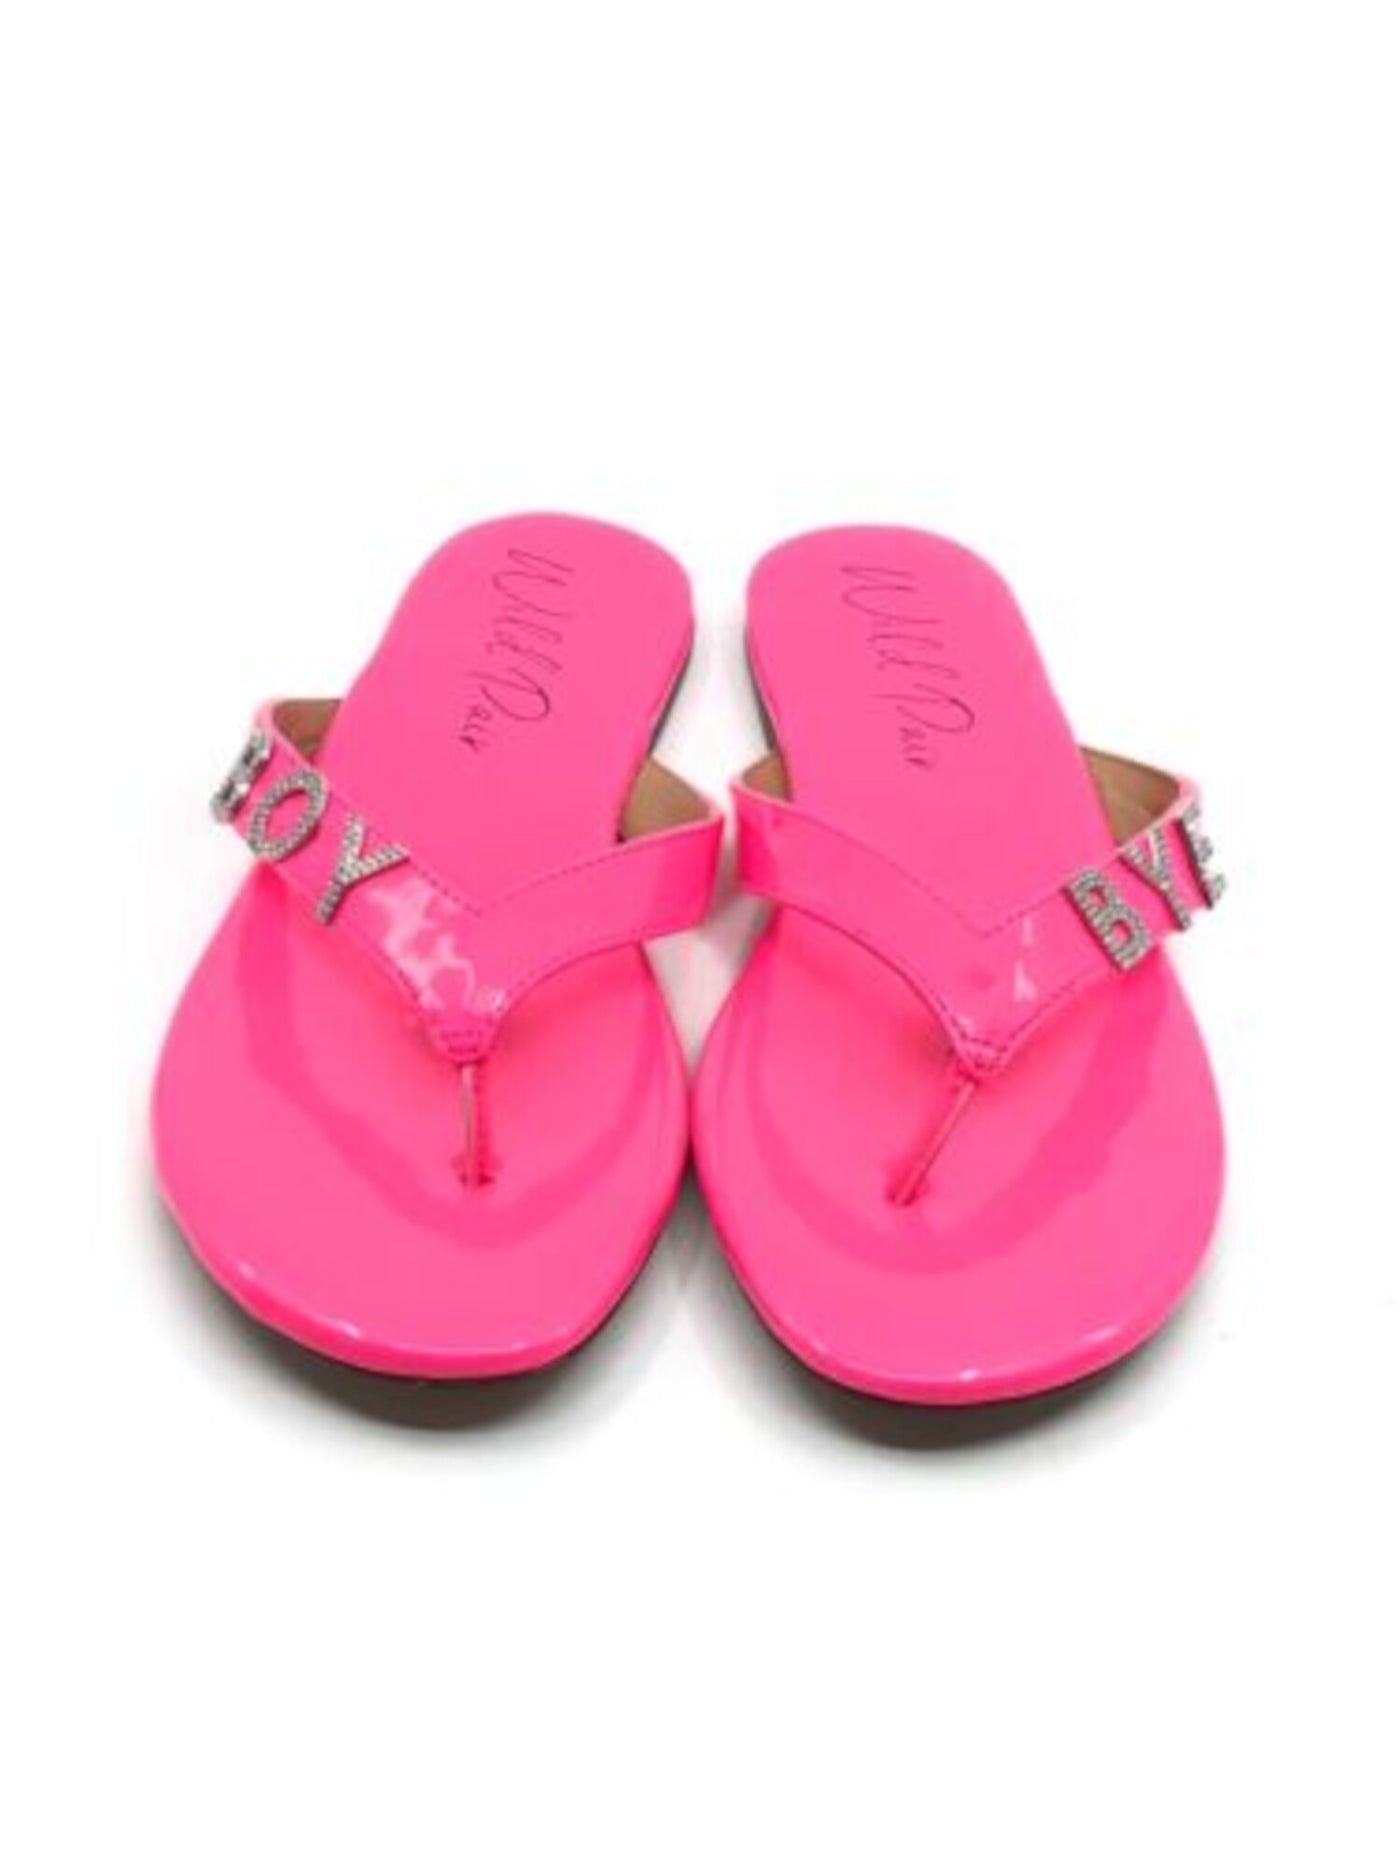 WILD PAIR Womens Pink Embellished Rhinestone Fantasia Round Toe Slip On Thong Sandals 6.5 M